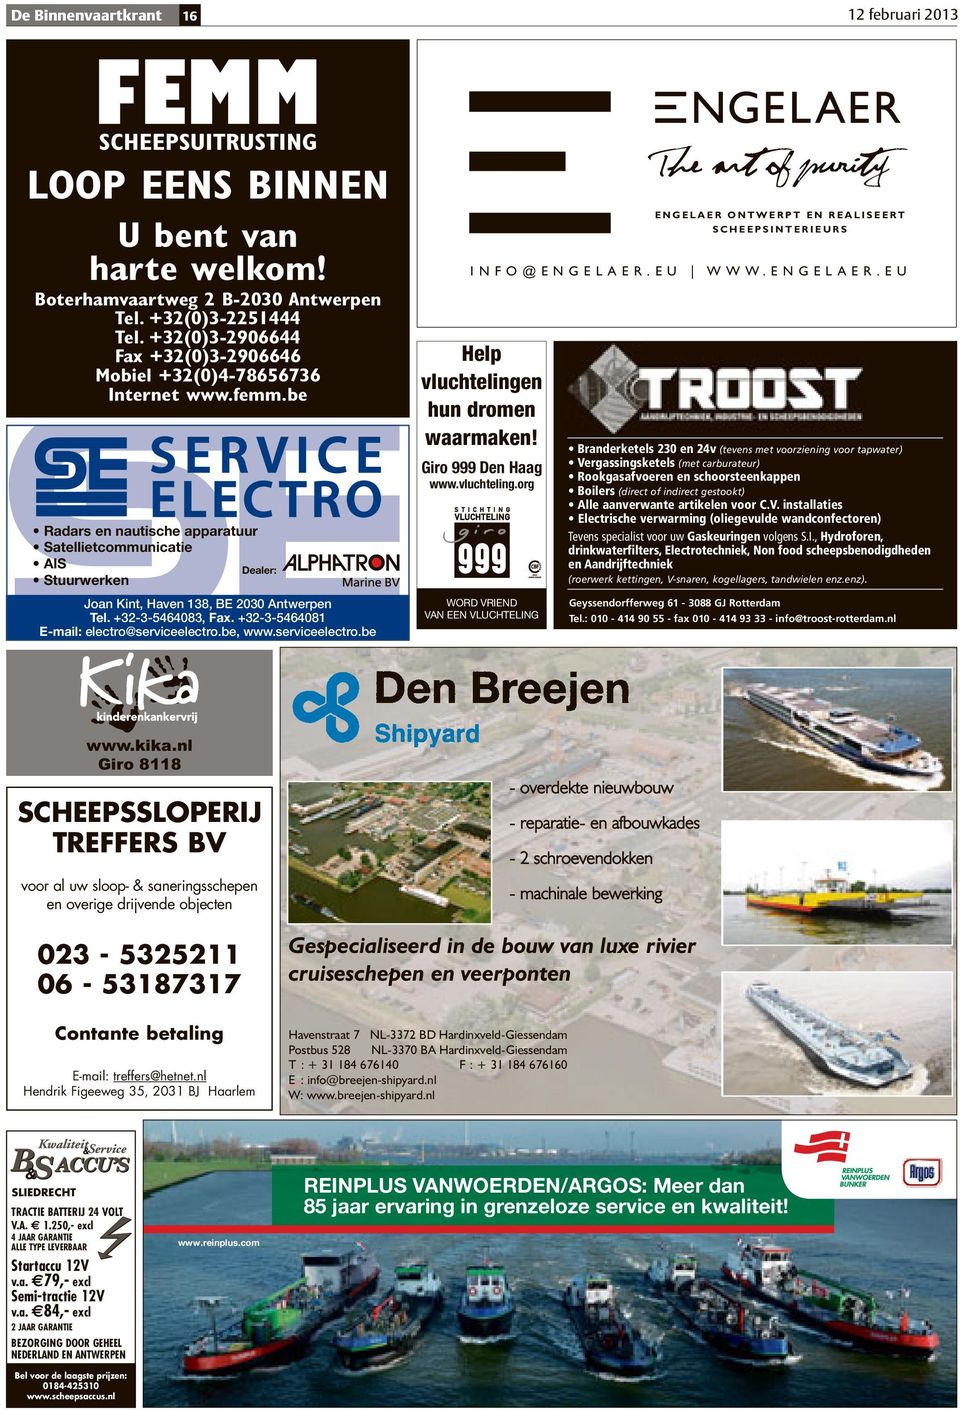 be Radars en nautische apparatuur Satellietcommunicatie AIS Dealer: Stuurwerken Joan Kint, Haven 138, BE 2030 Antwerpen Tel. +32-3-5464083, Fax. +32-3-5464081 E-mail: electro@serviceelectro.be, www.